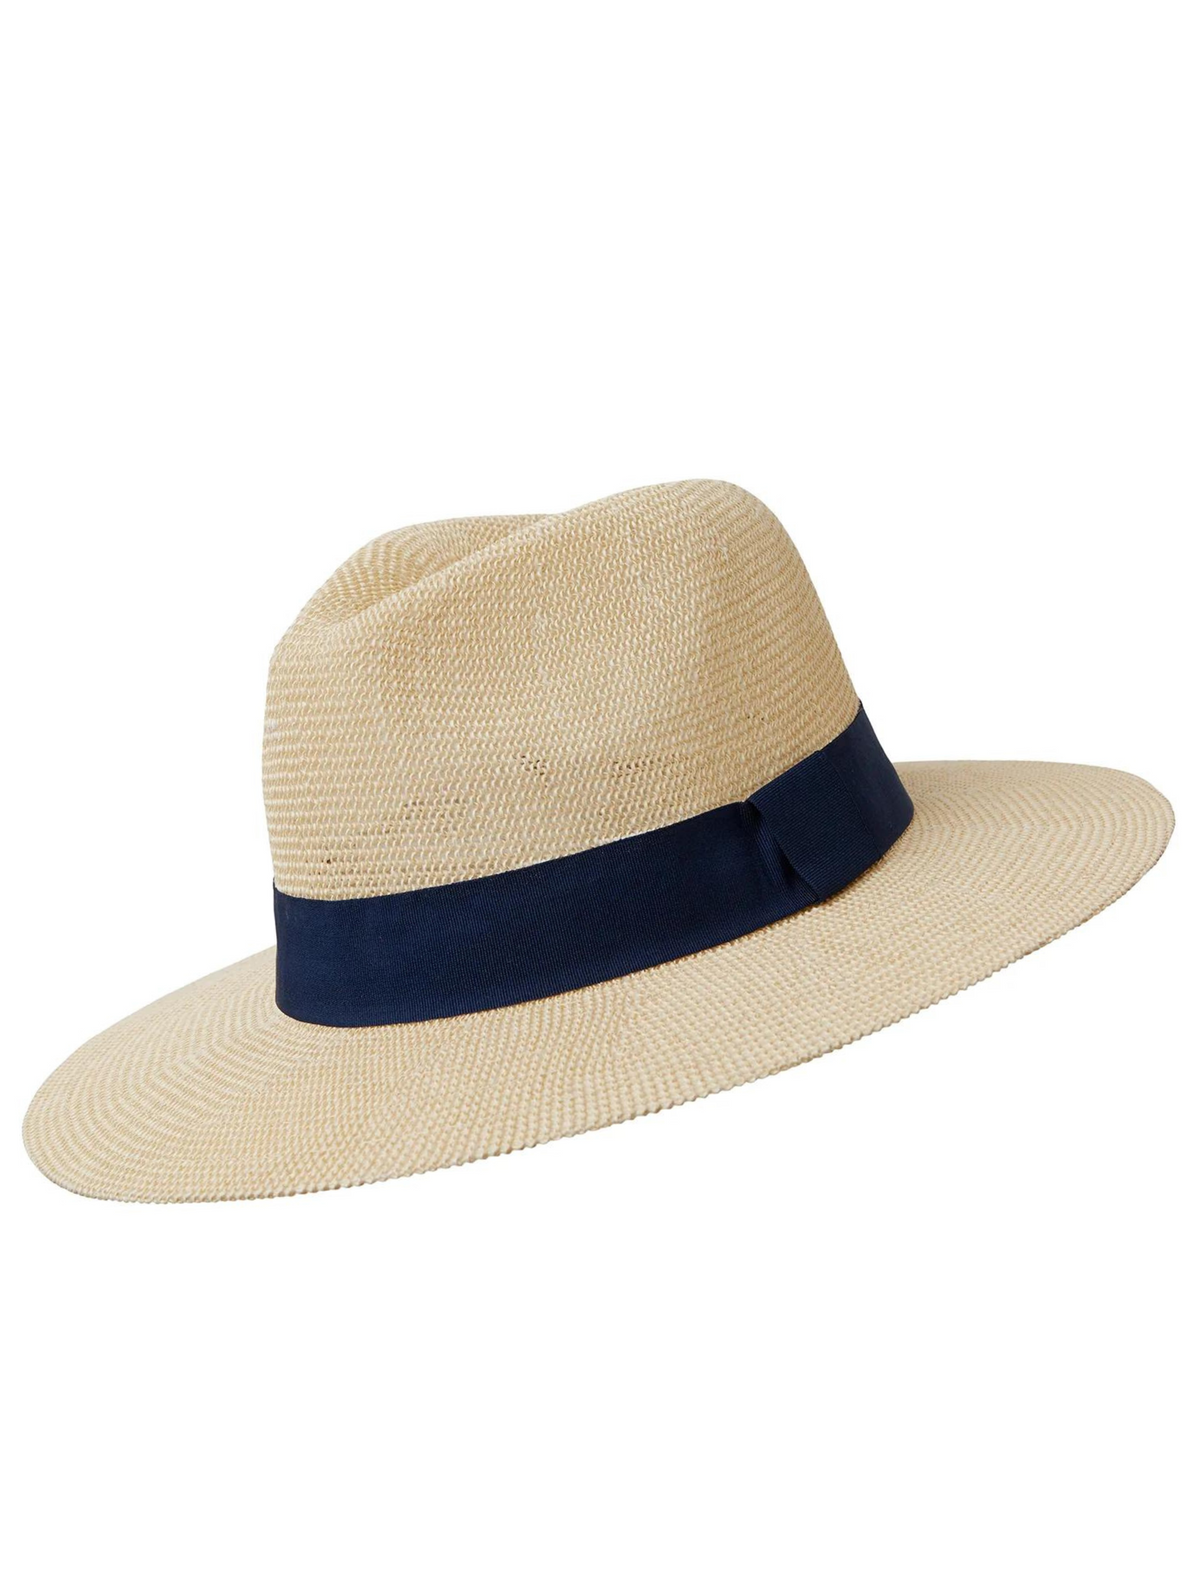 Panama hat with a navy ribbon